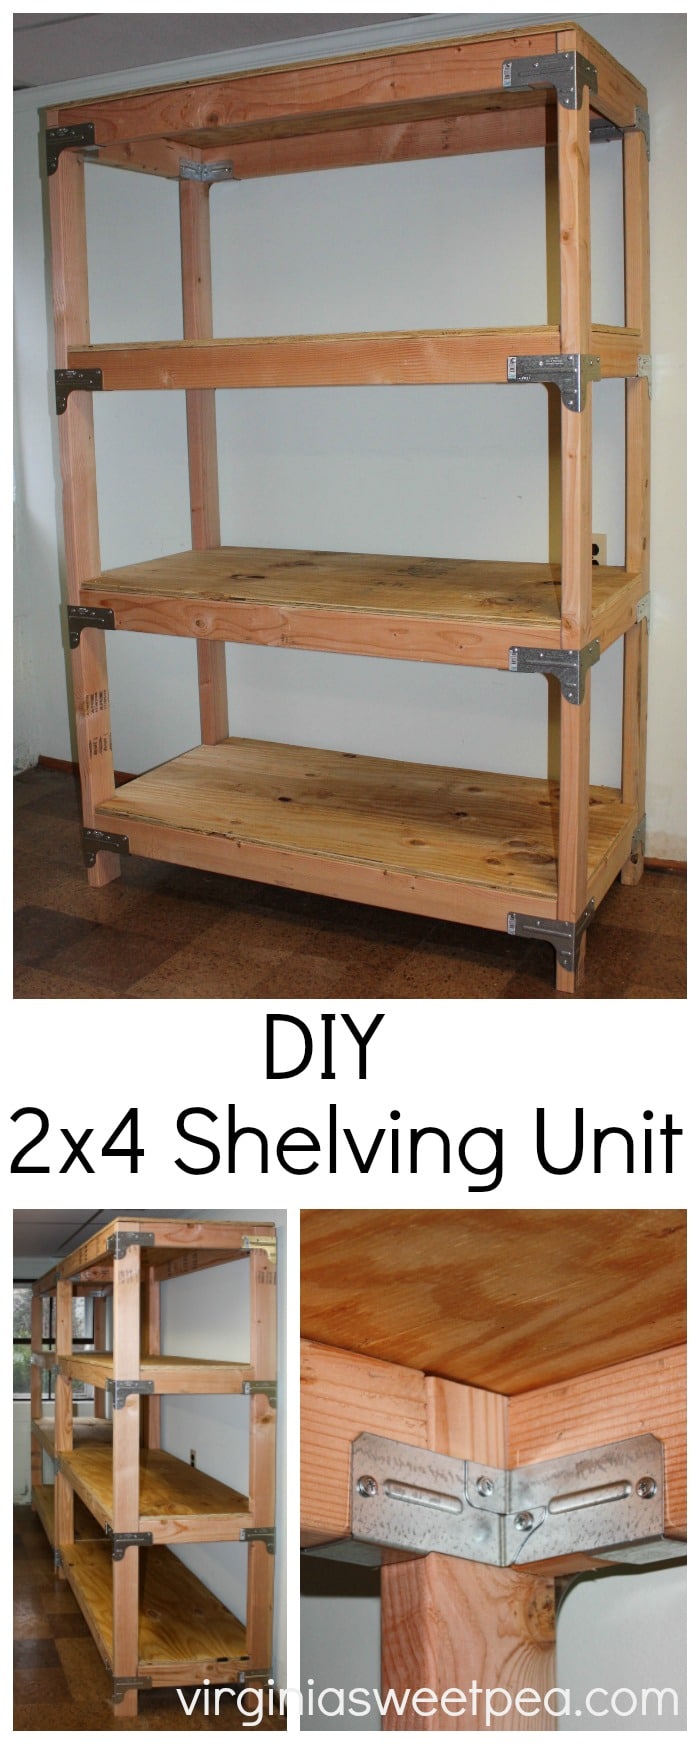 Shelving unit made using 2x4 lumber